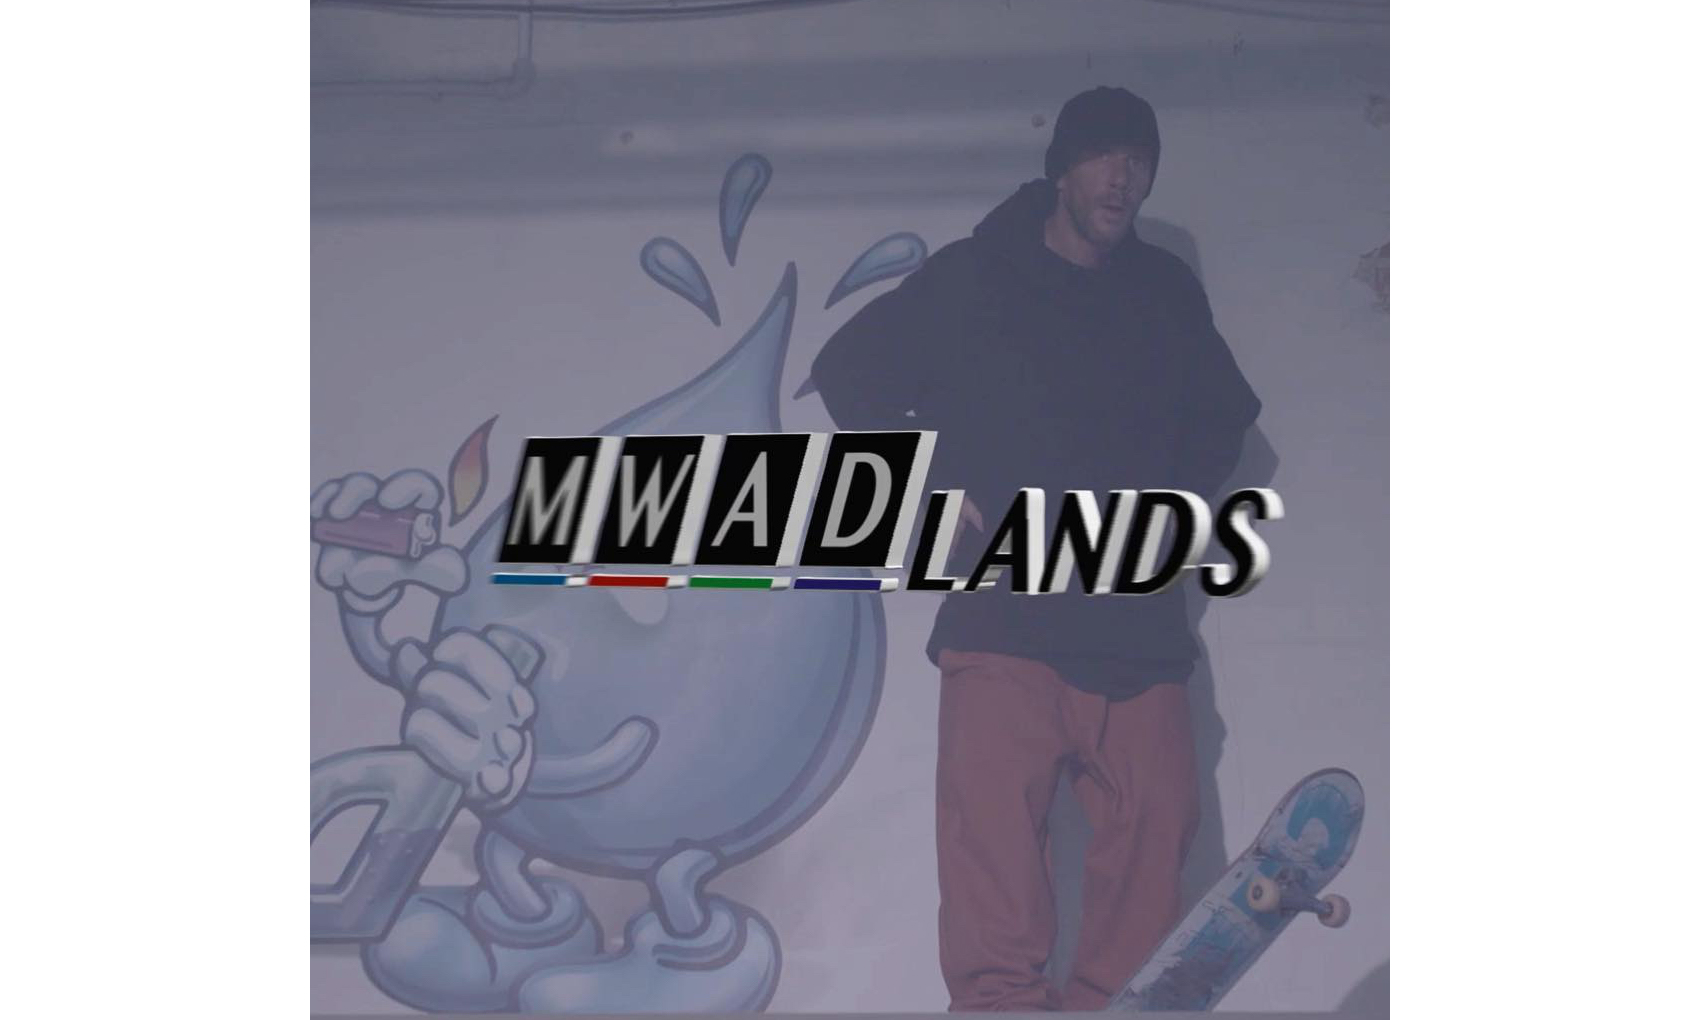 Palace Skateboards 宣布将开设滑板公园 “MWADLANDS”